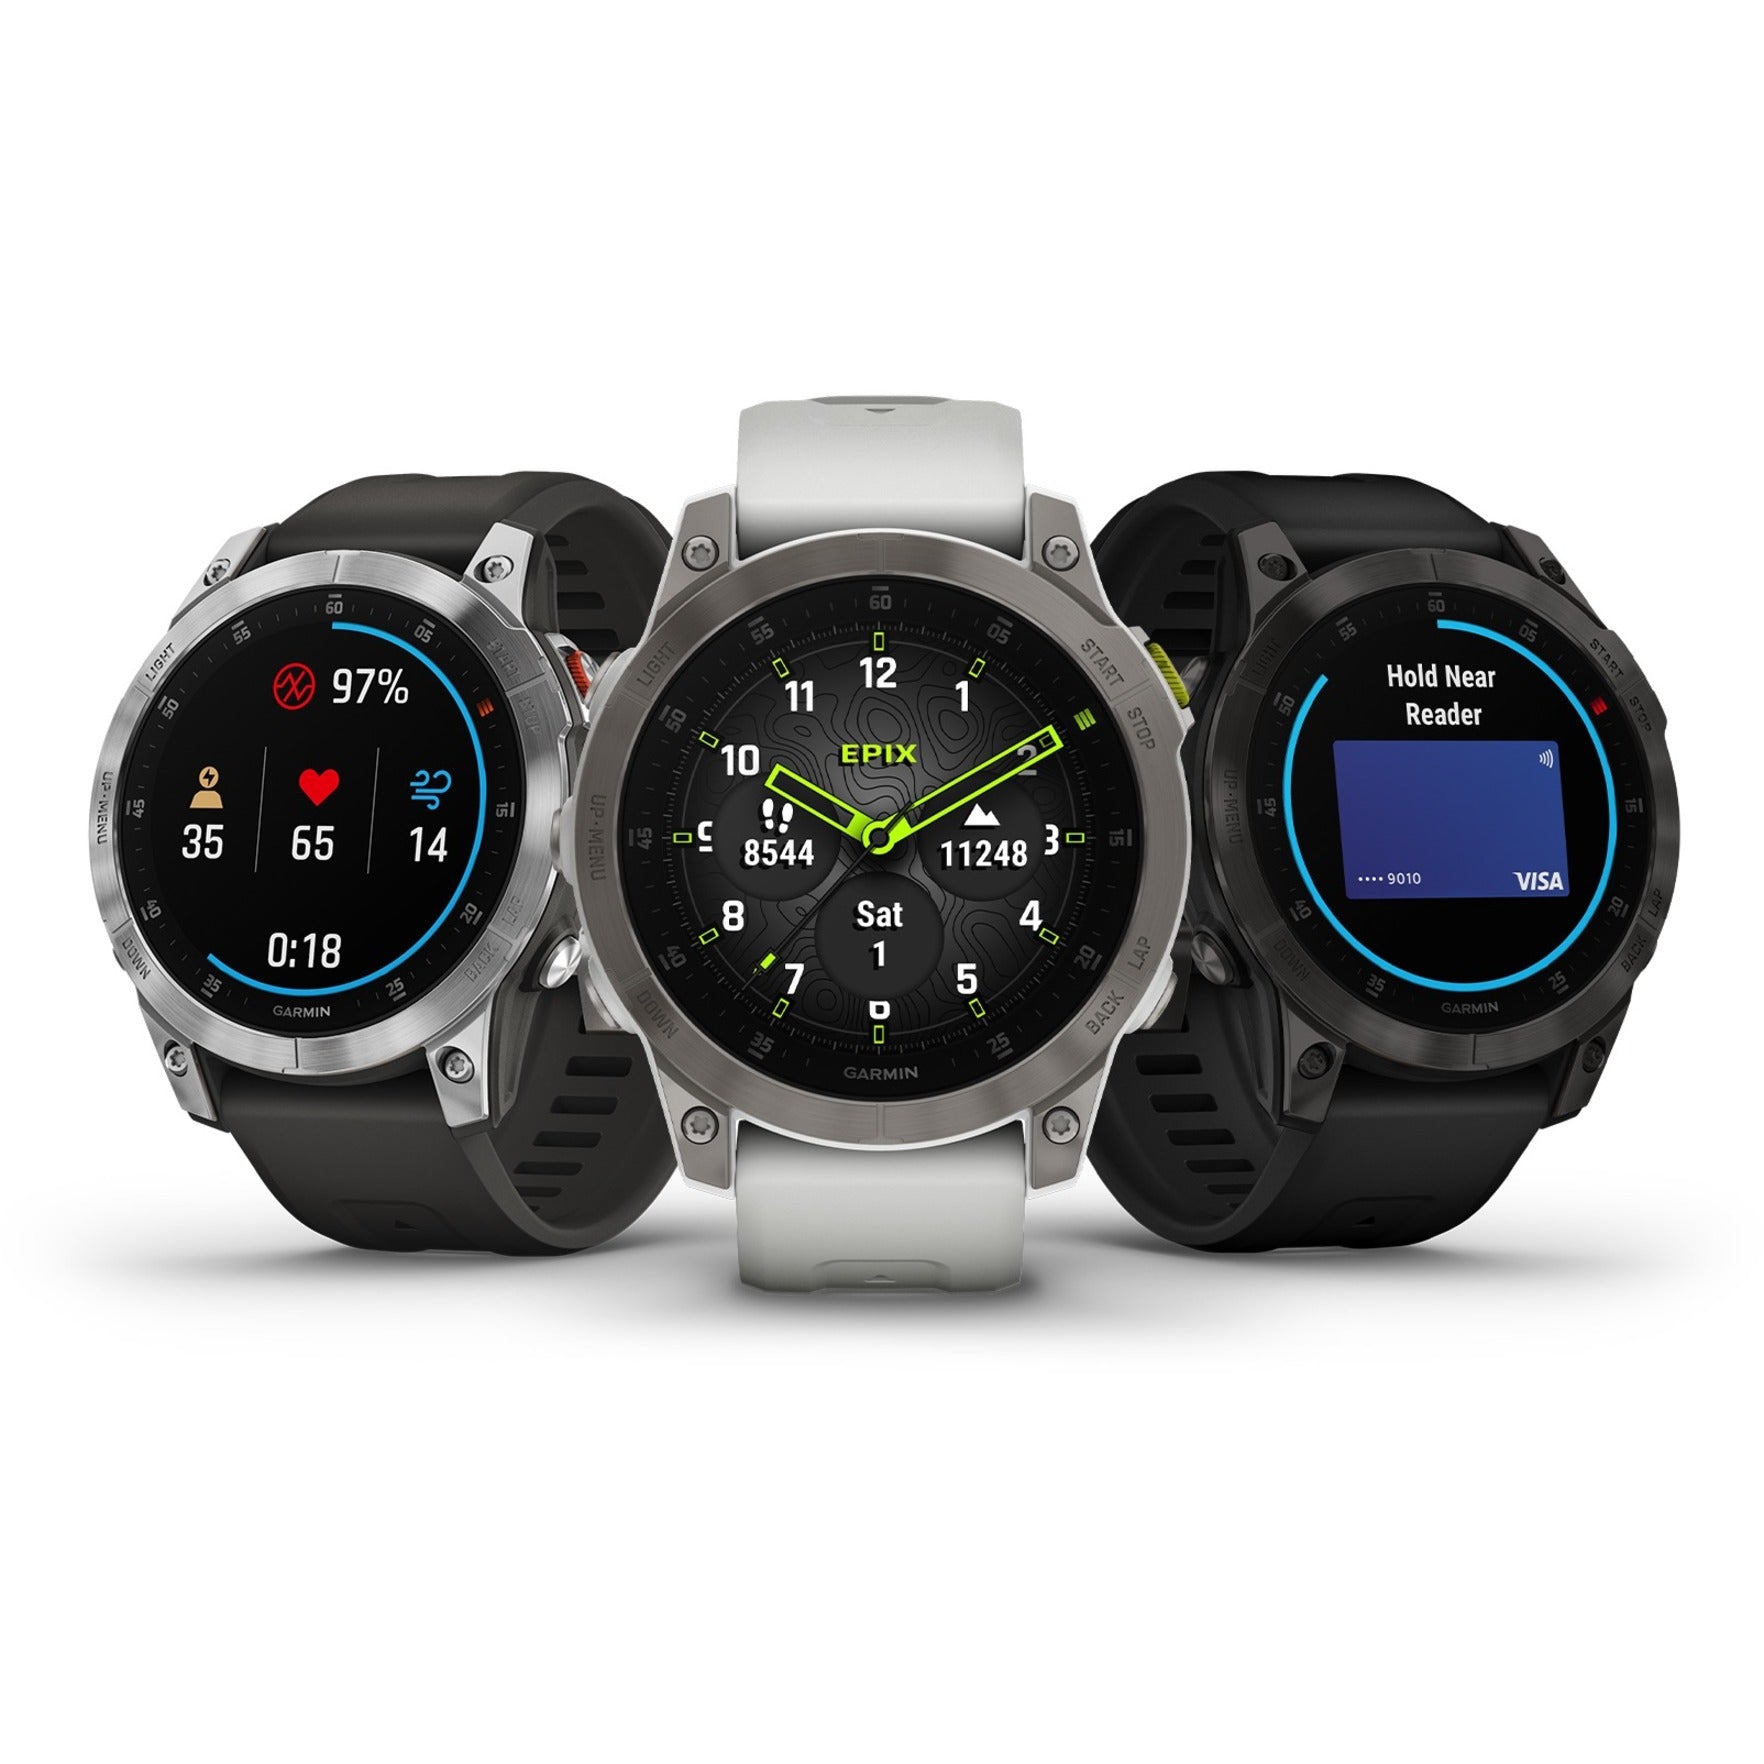 Garmin 010-02582-20 epix (Gen 2) Smart Watch, Titanium with White Band, Water Resistant, AMOLED Display, GPS, Bluetooth